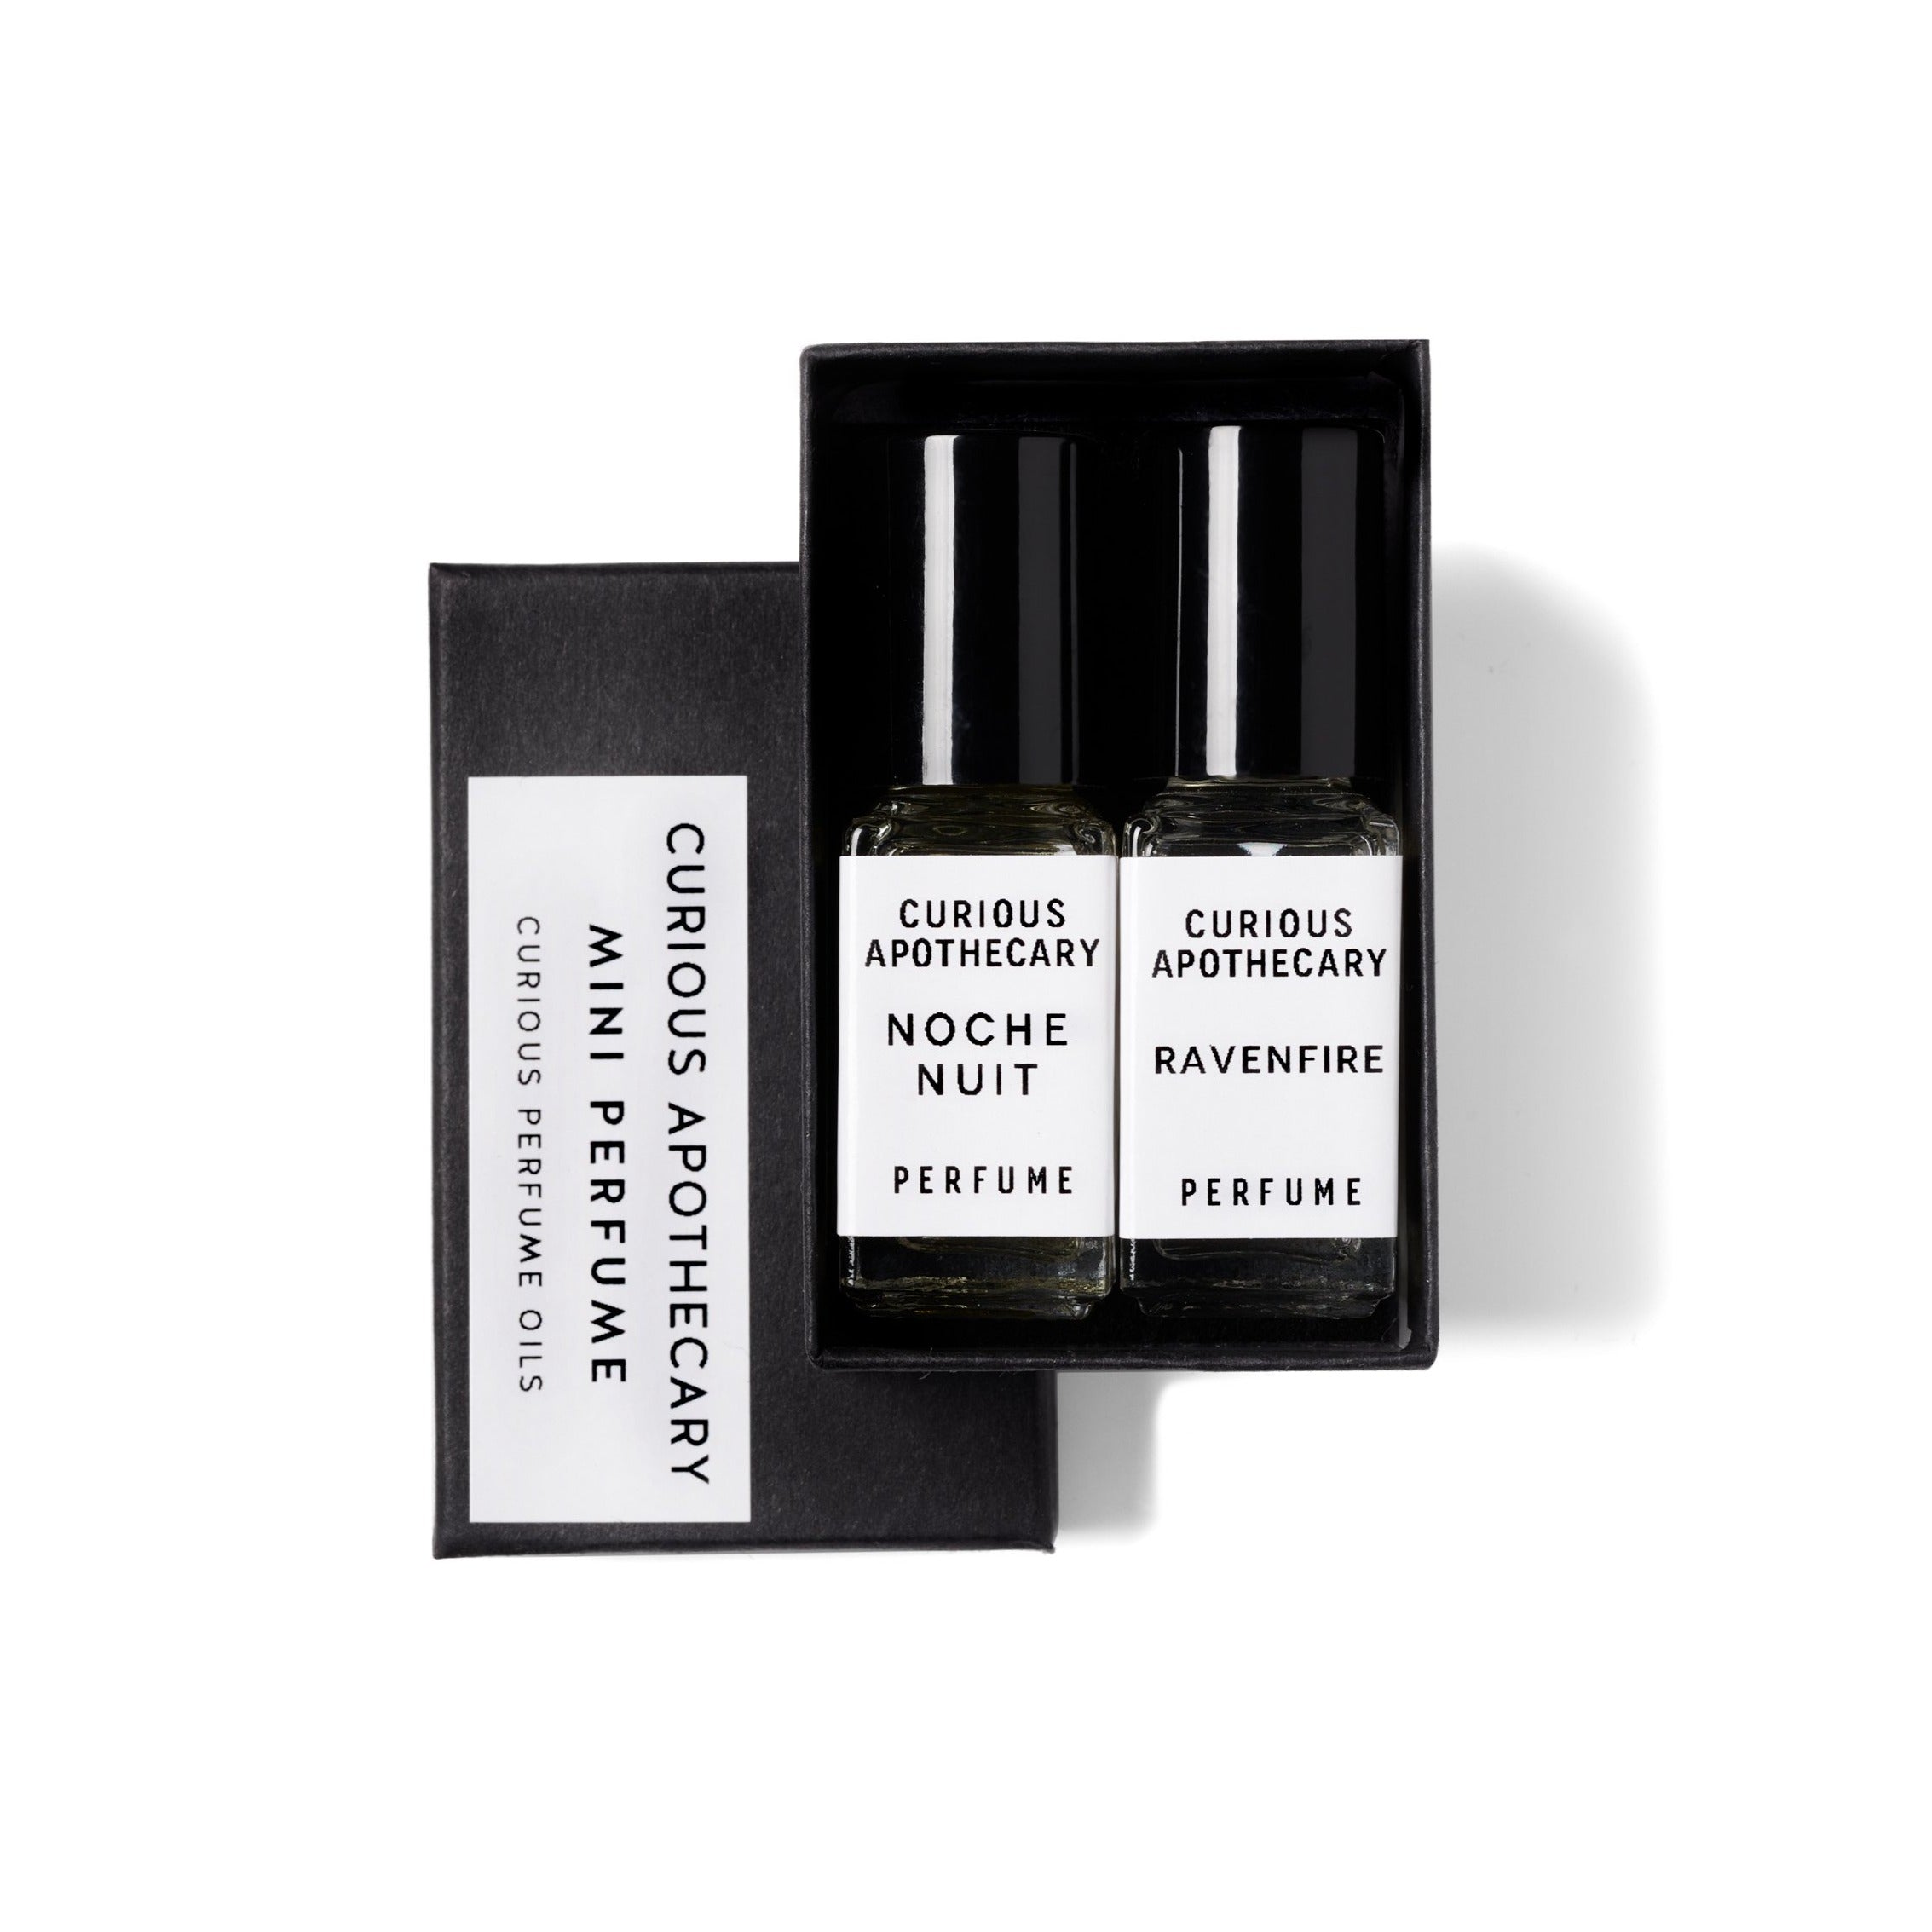 Mini Perfumes Sample Set